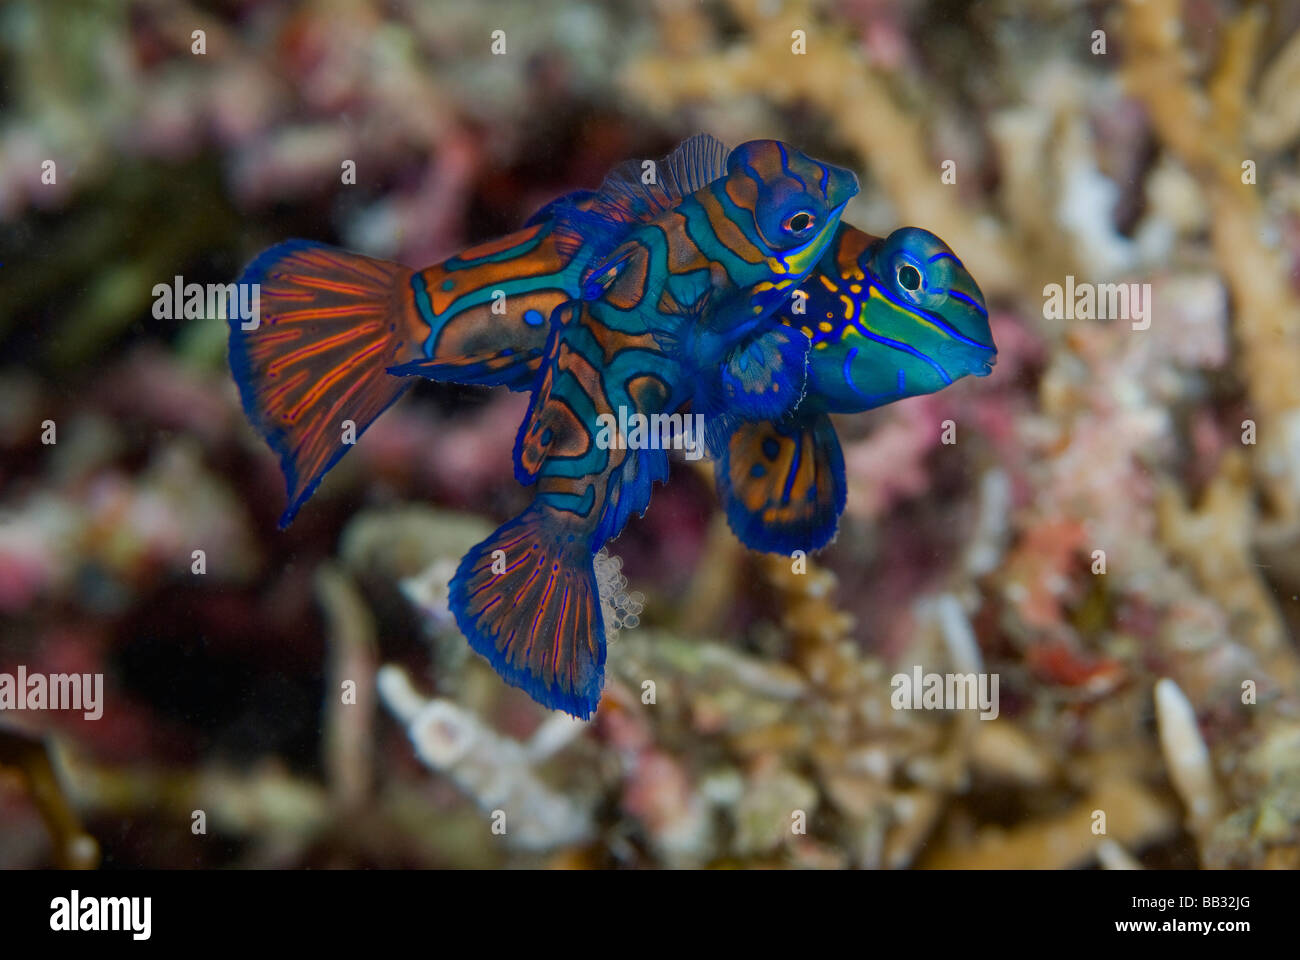 Indian Ocean, Indonesia, Sulawesi Island, Lembeh Straits. Male and female mandarinfish mating. Stock Photo